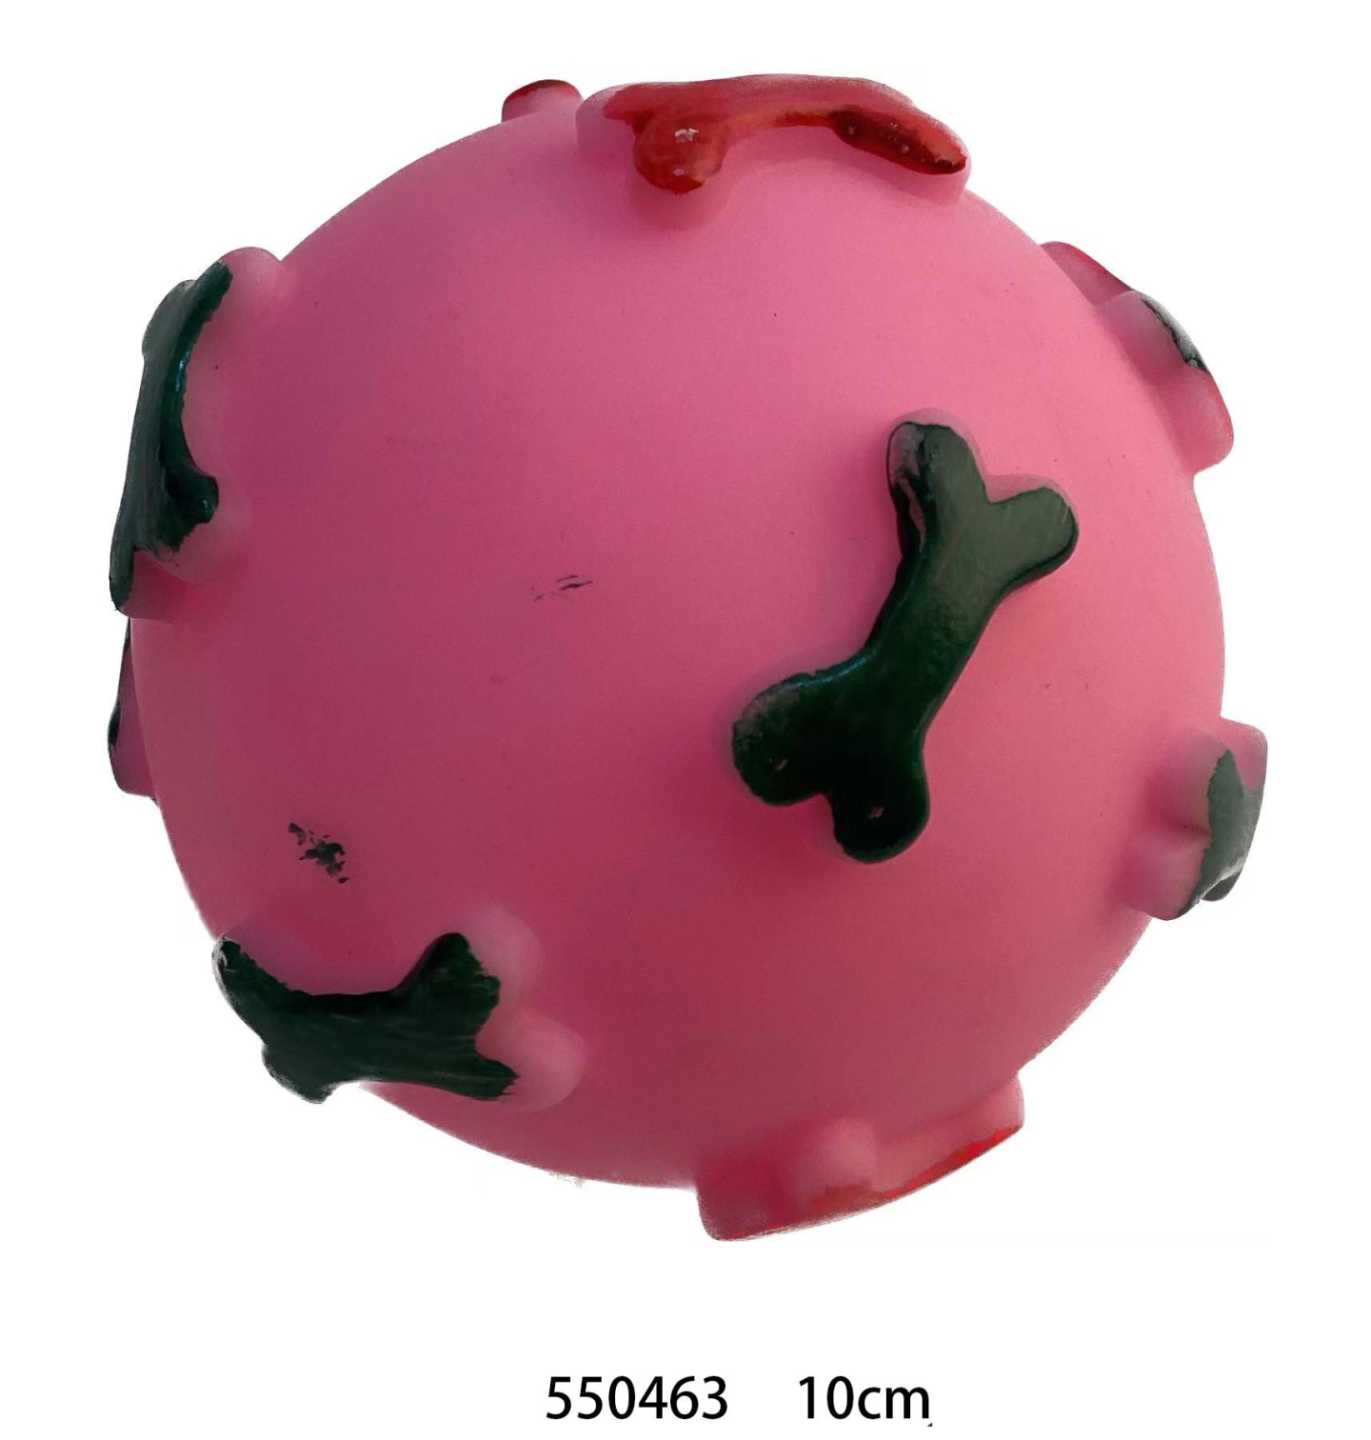 Latex ball dog toy - 10cm - 550463